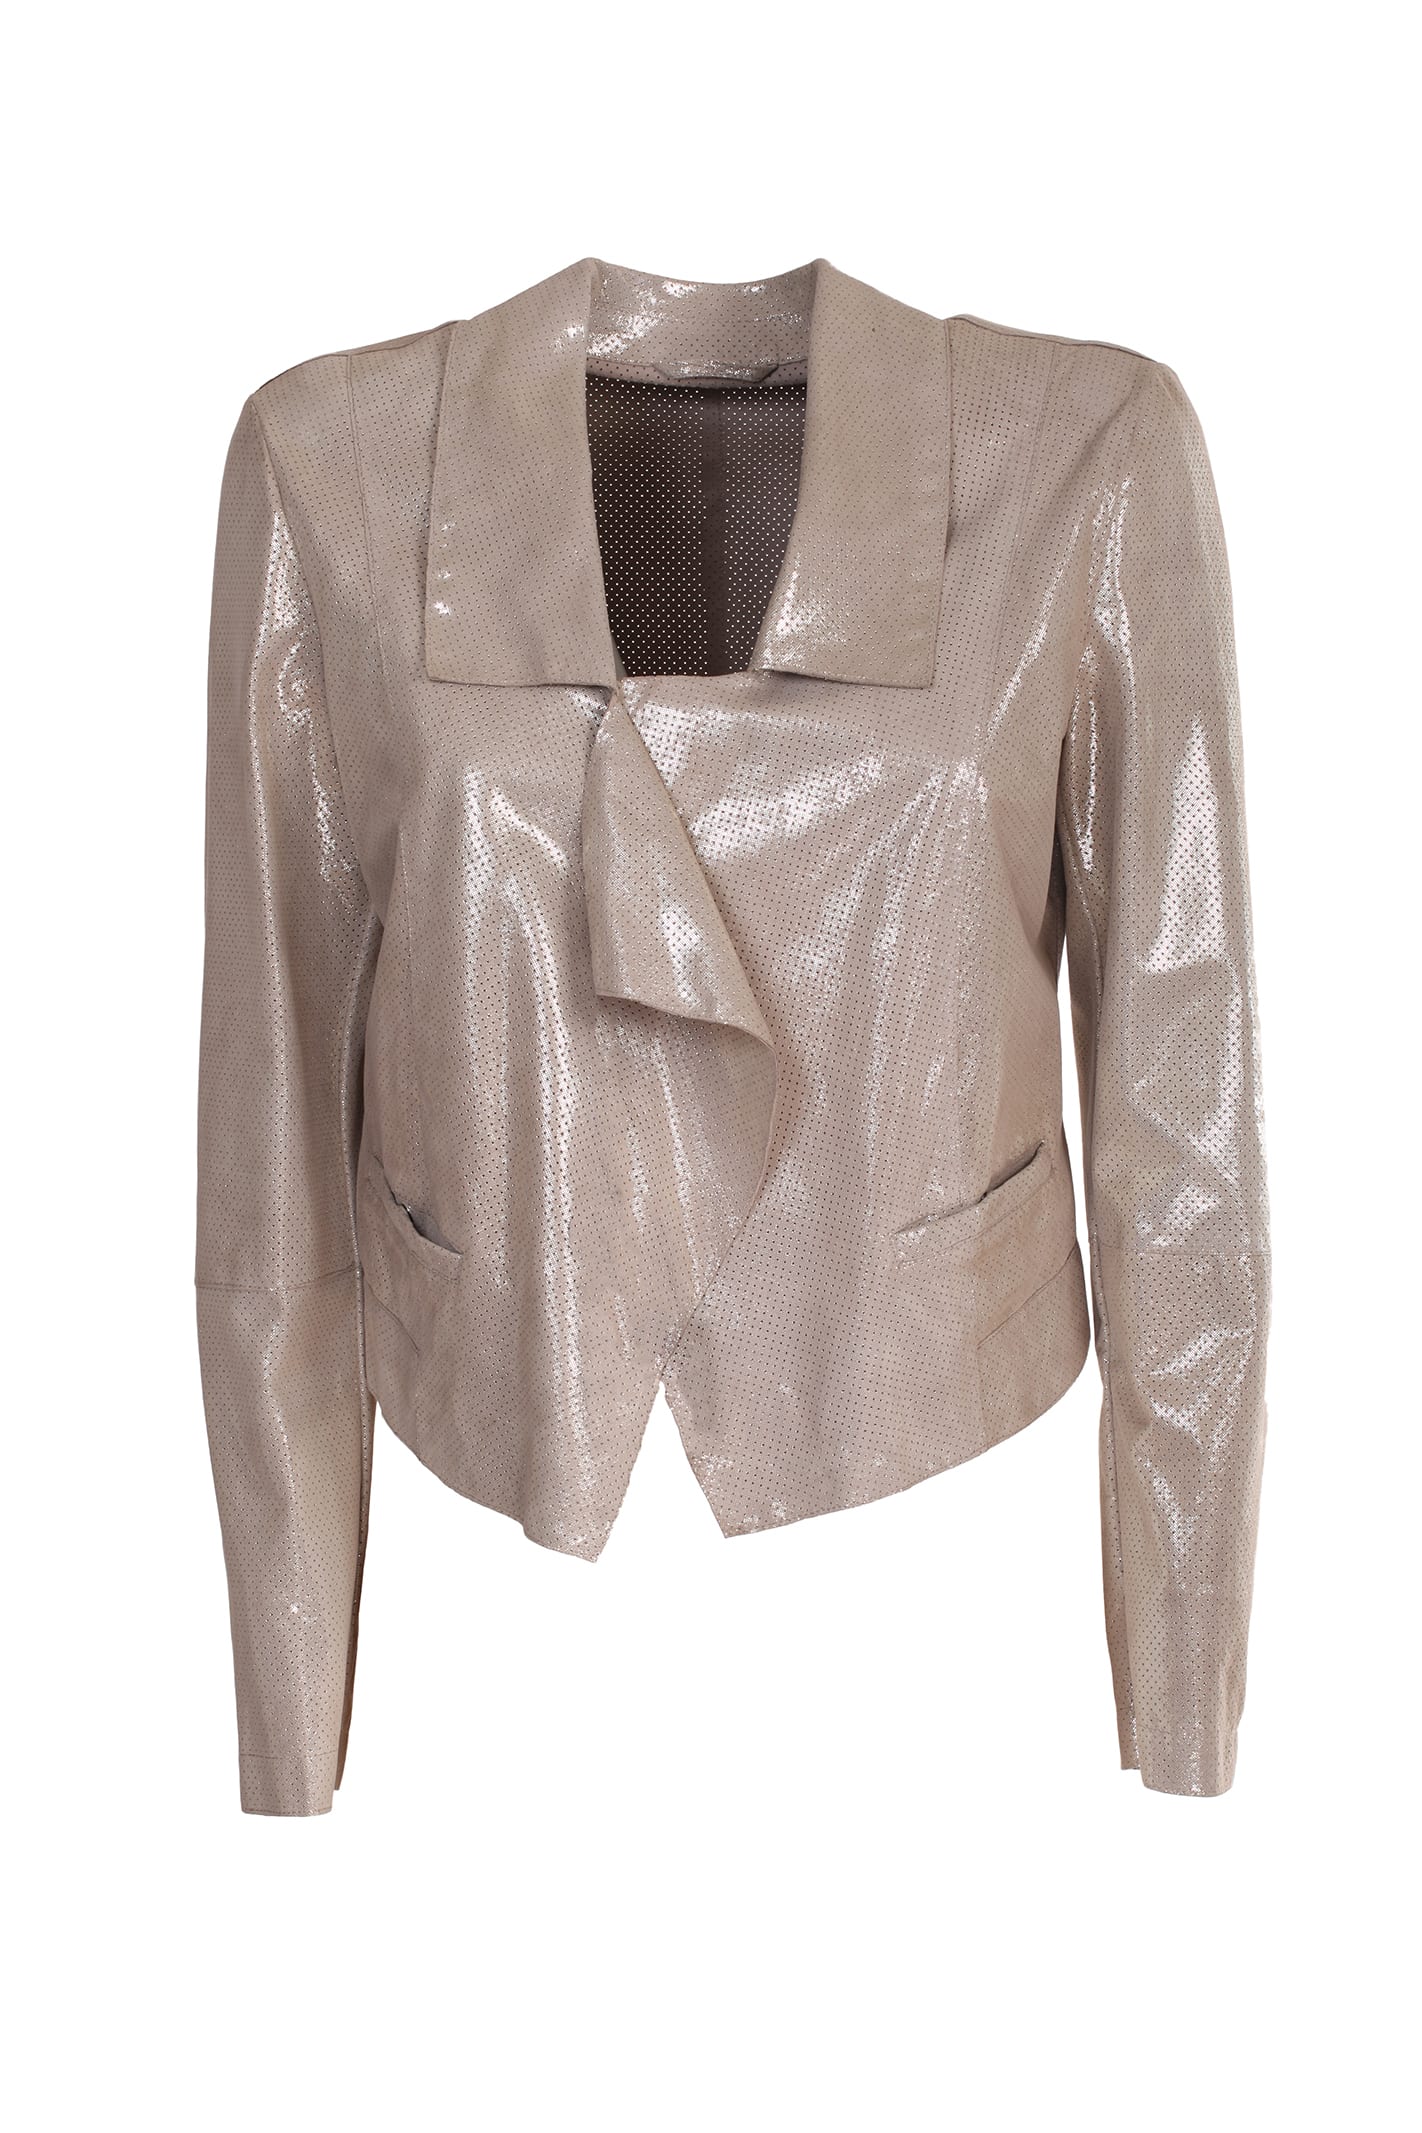 Emporio Armani leather jacket